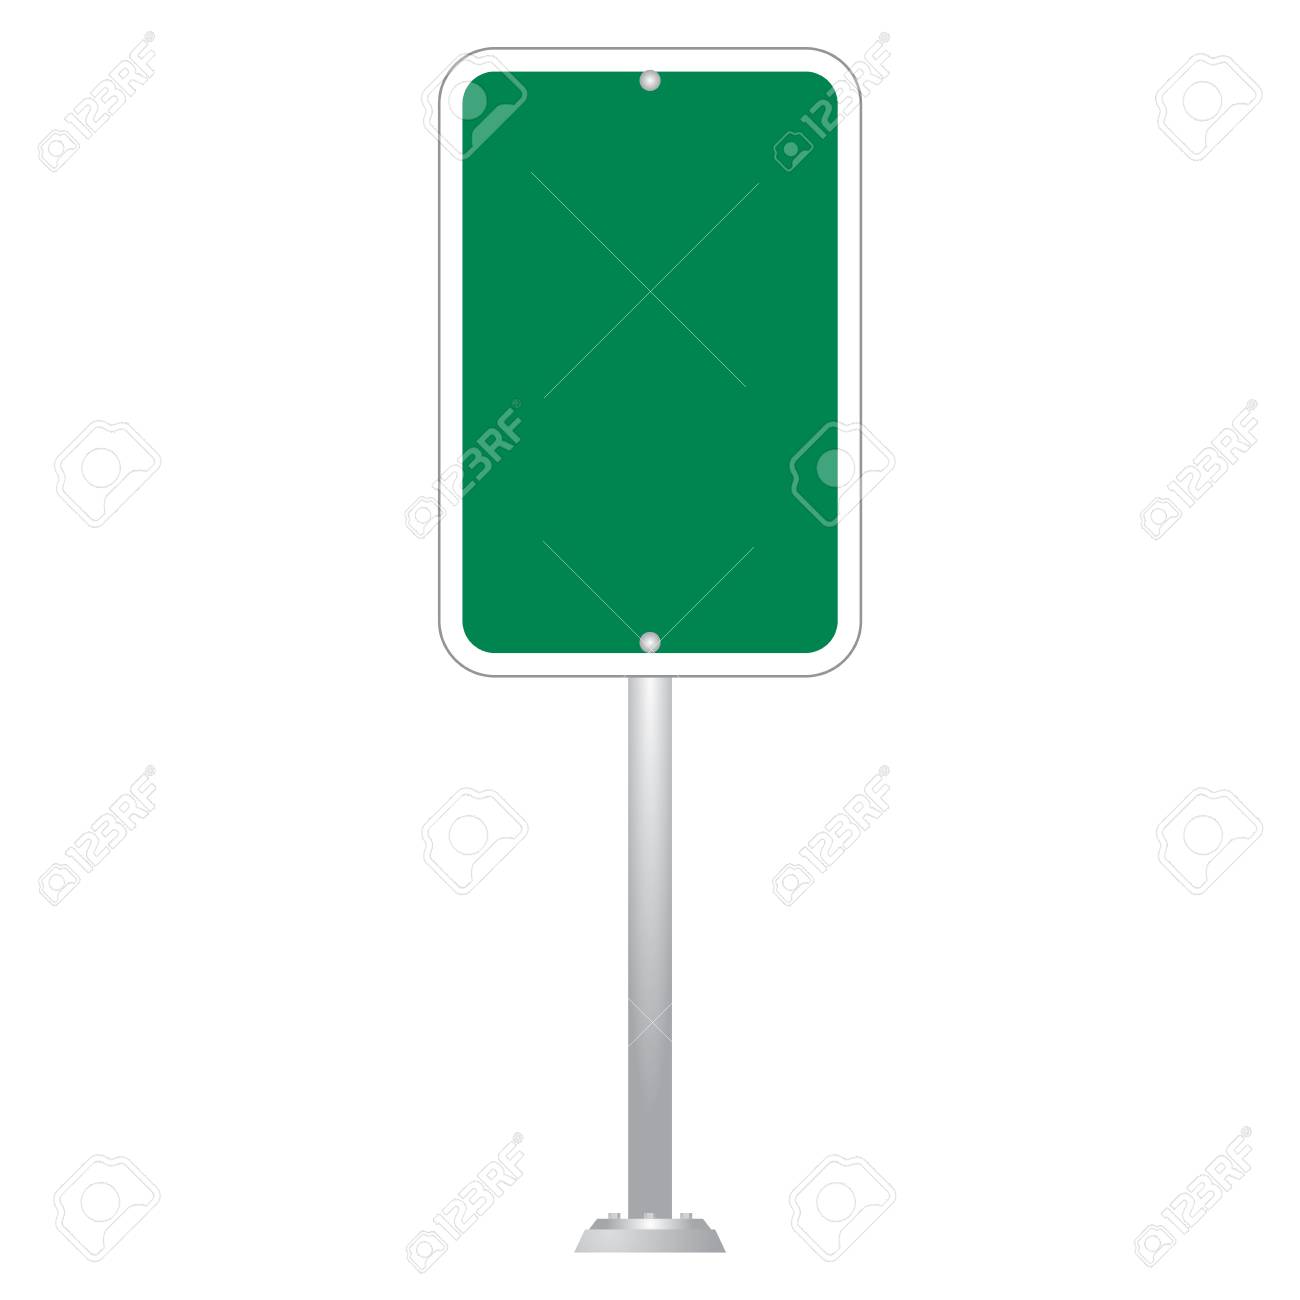 highway clipart signboard